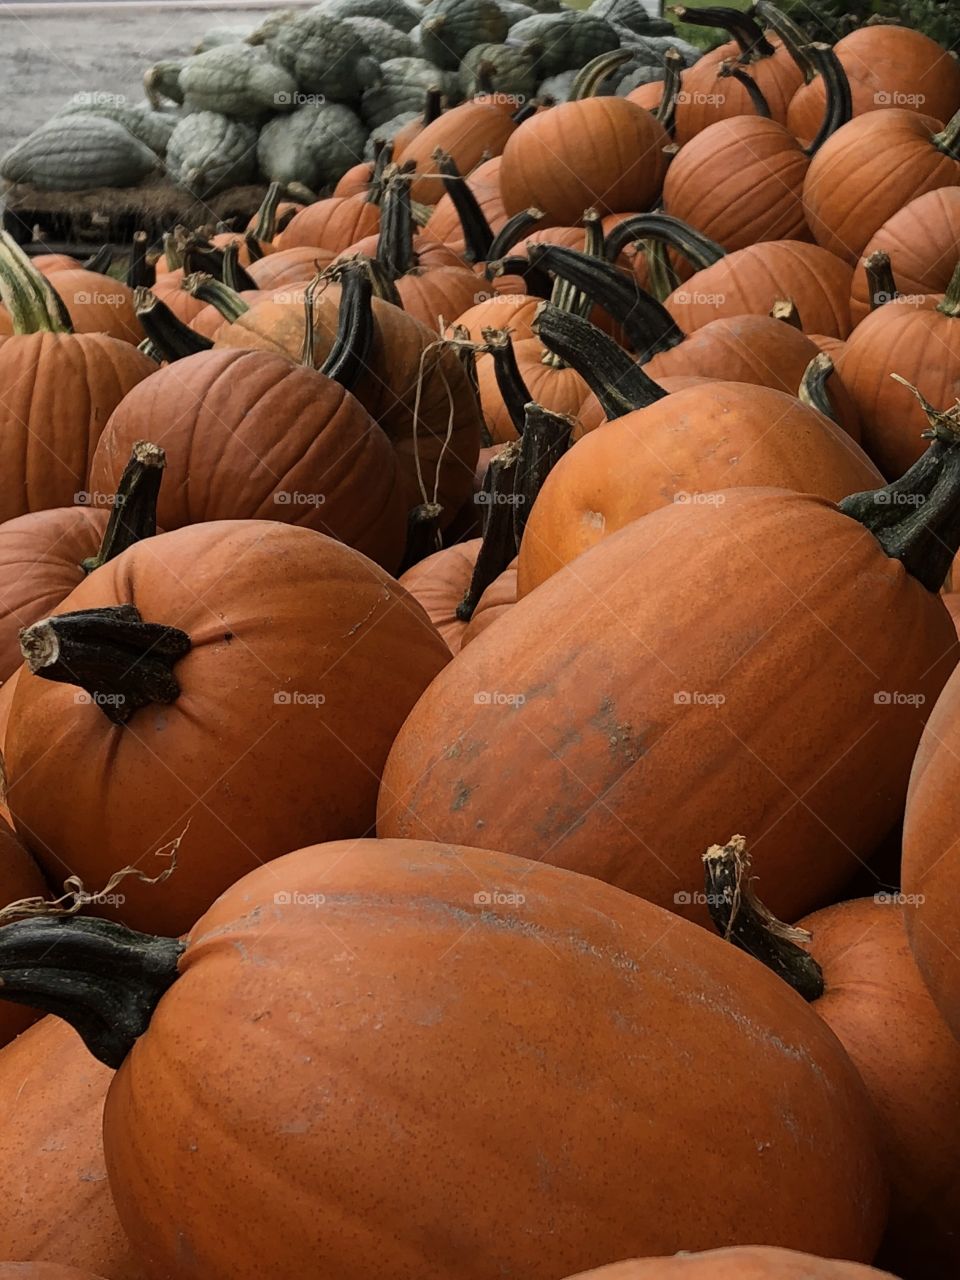 Harvesting pumpkins 